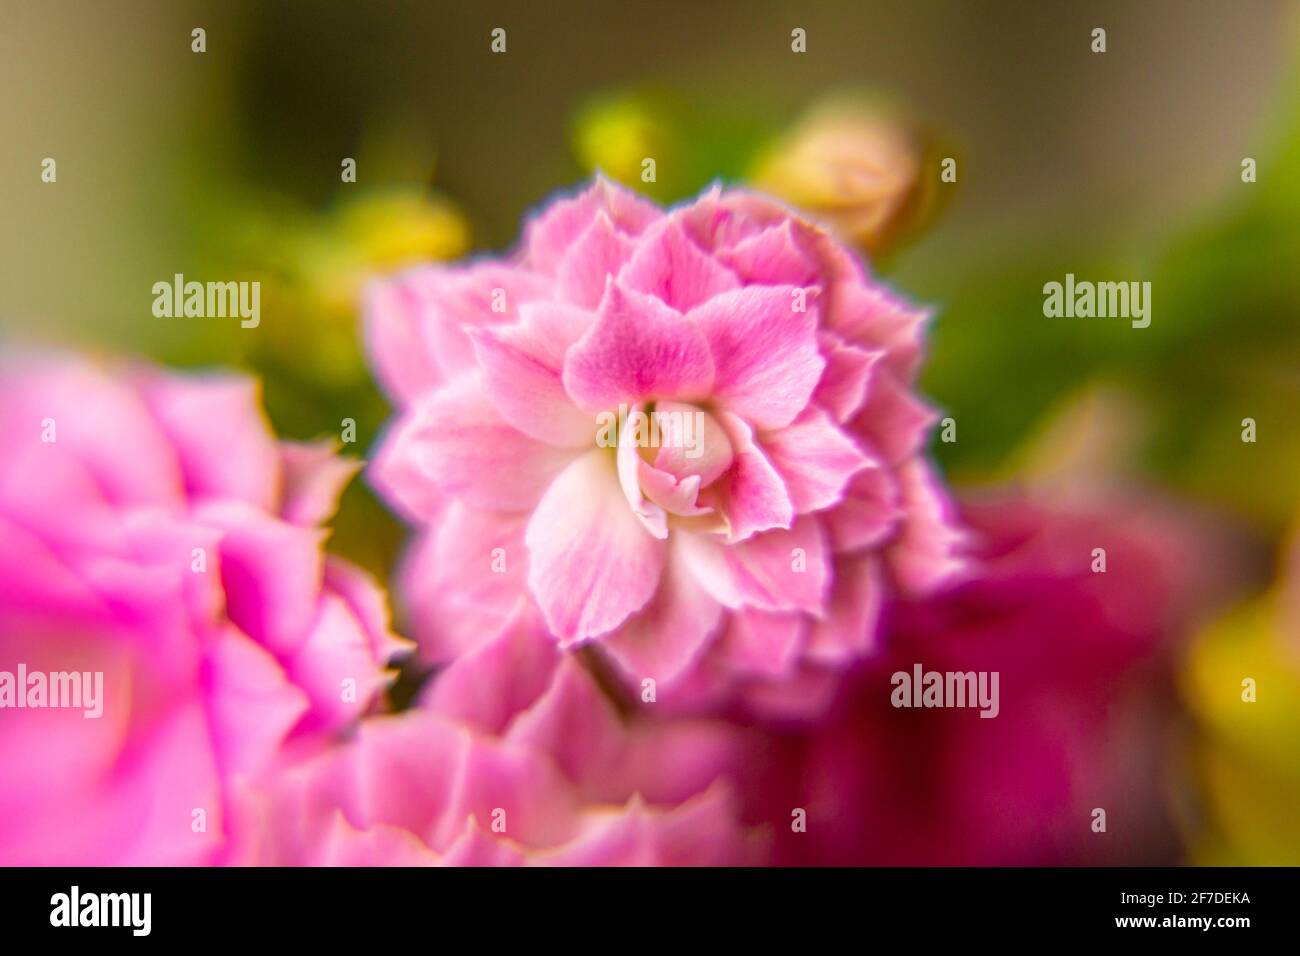 houseplant flower Kalanchoe Blossfeld pink Close-up shot with soft focus Stock Photo